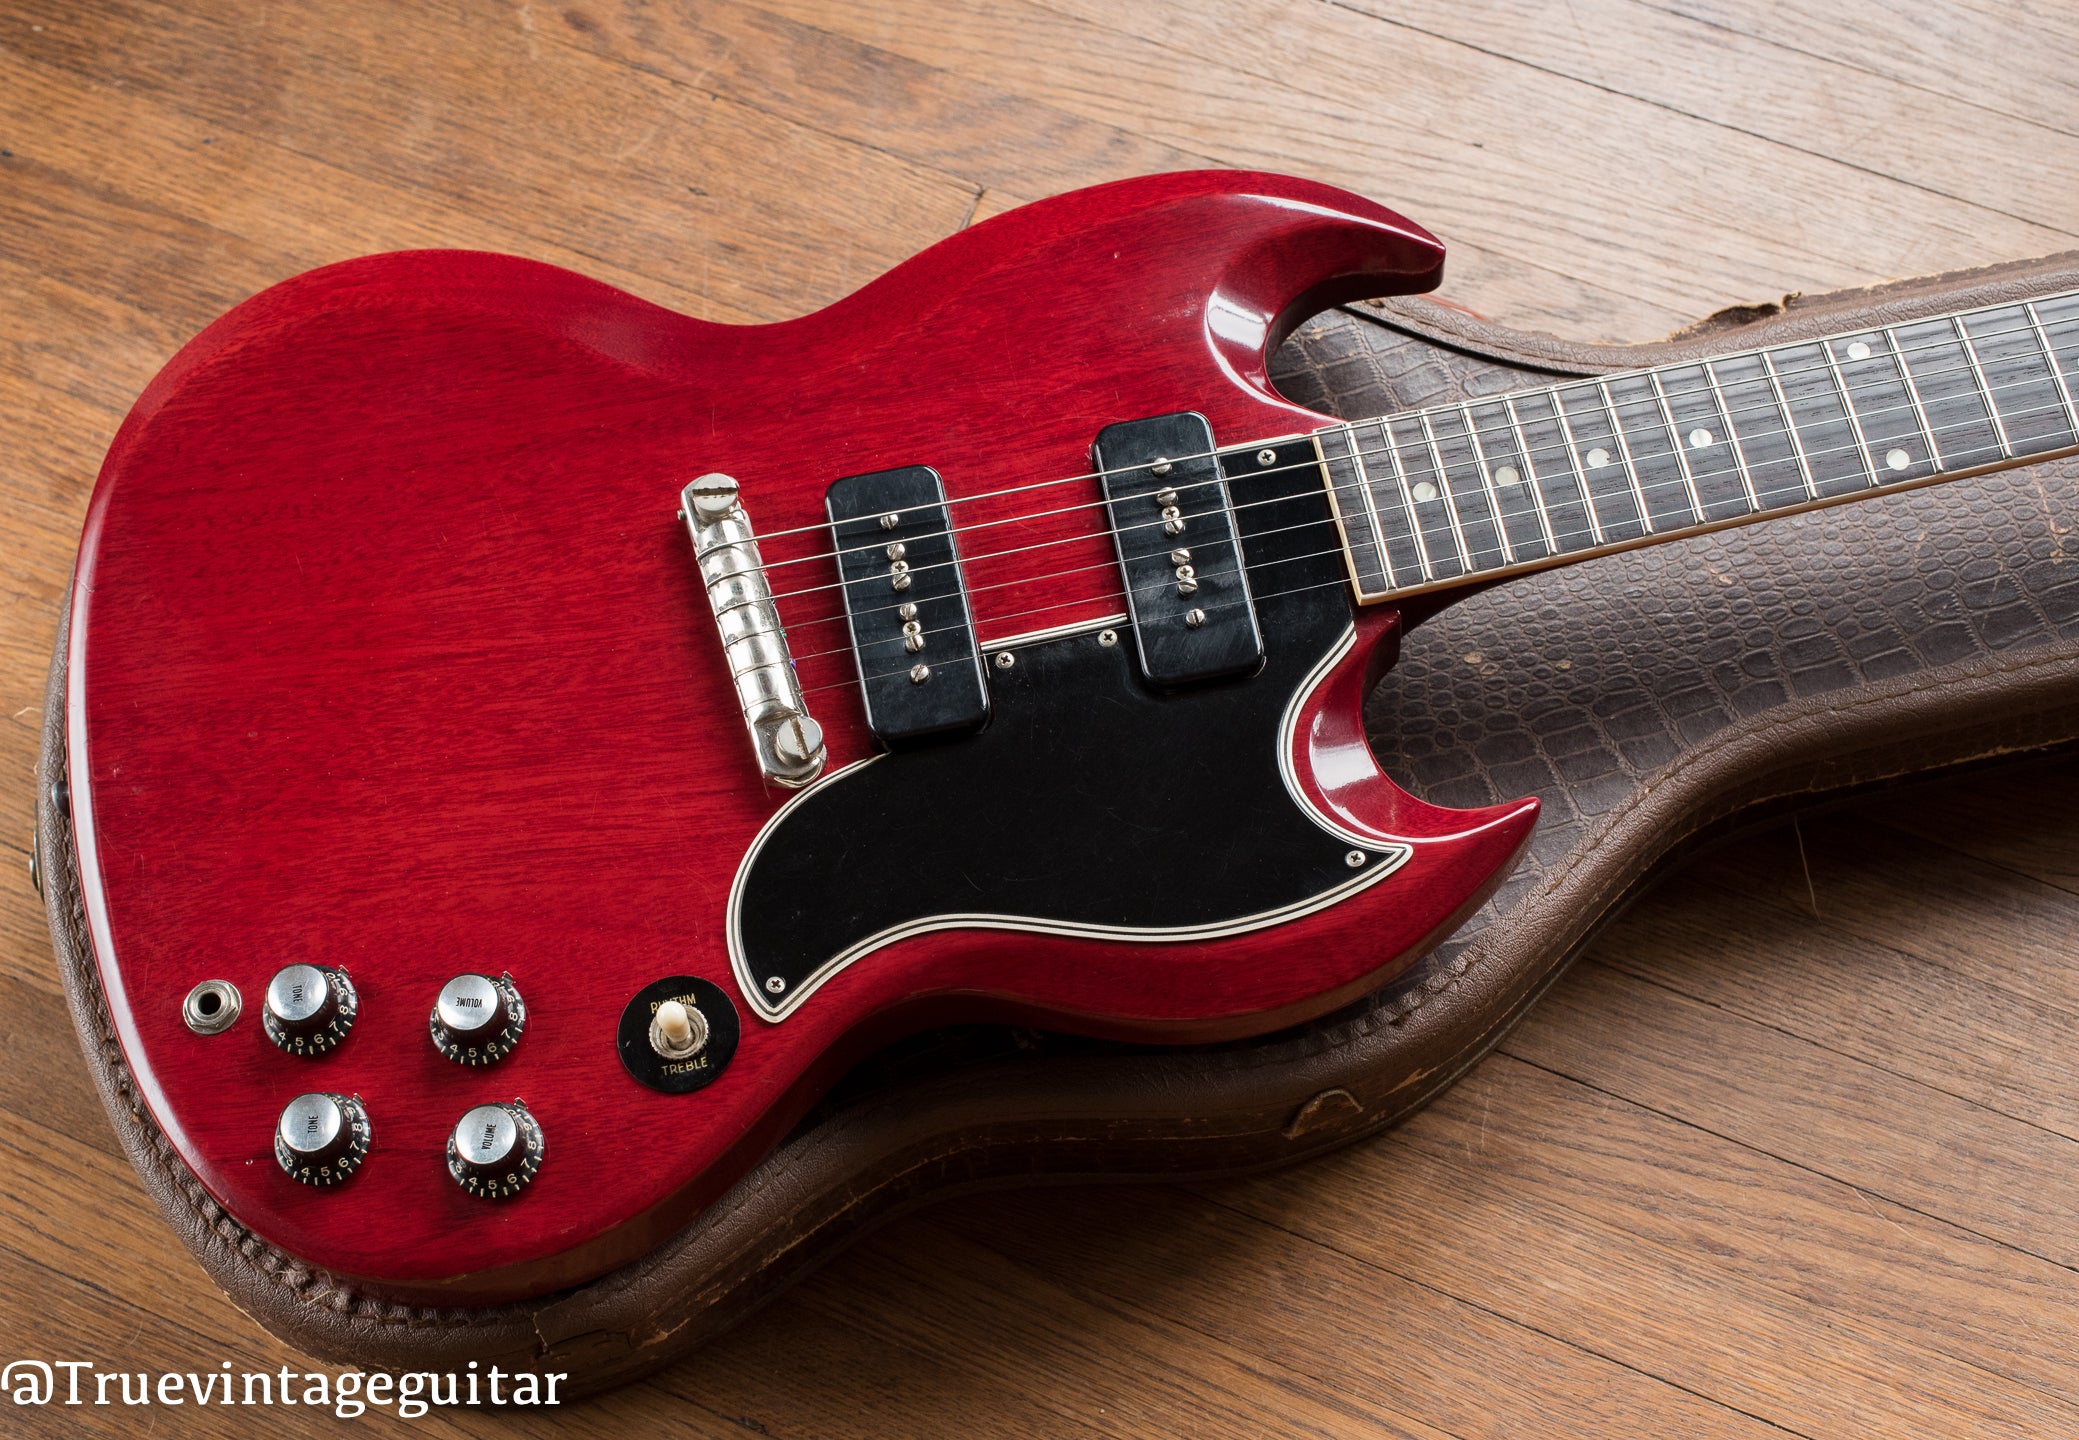 Vintage 1961 Gibson SG Special guitar